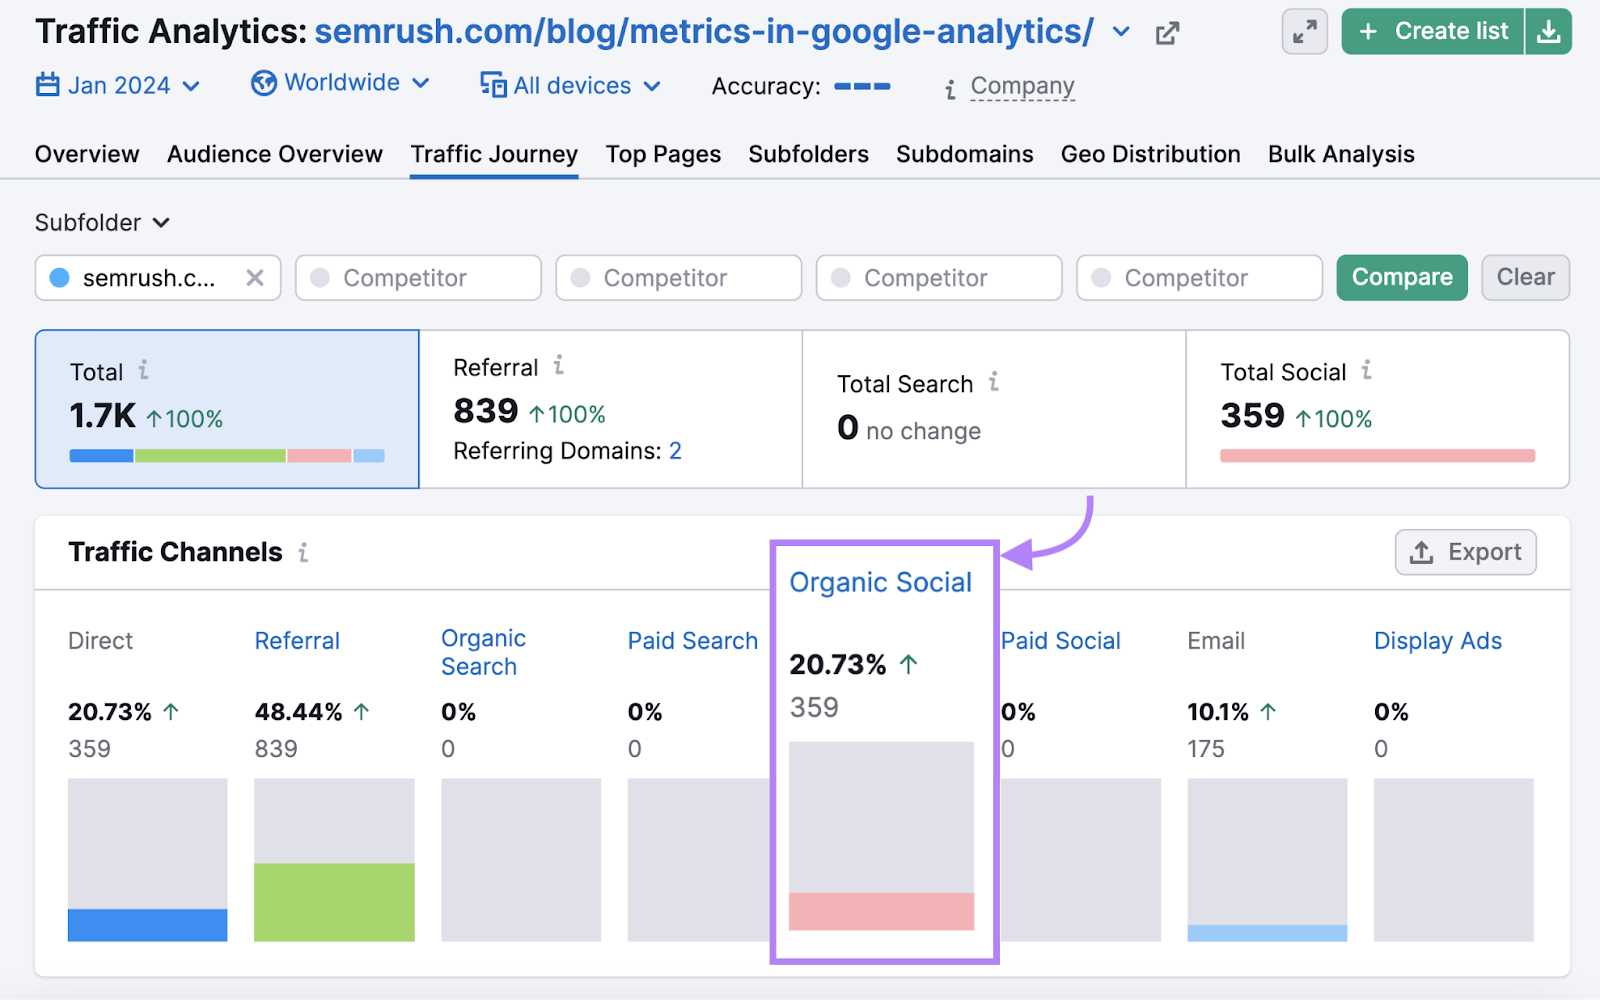 Around 20% of traffic to Semrush's blog on google analytics metrics comes from organic social media, according to Traffic Analytics tool